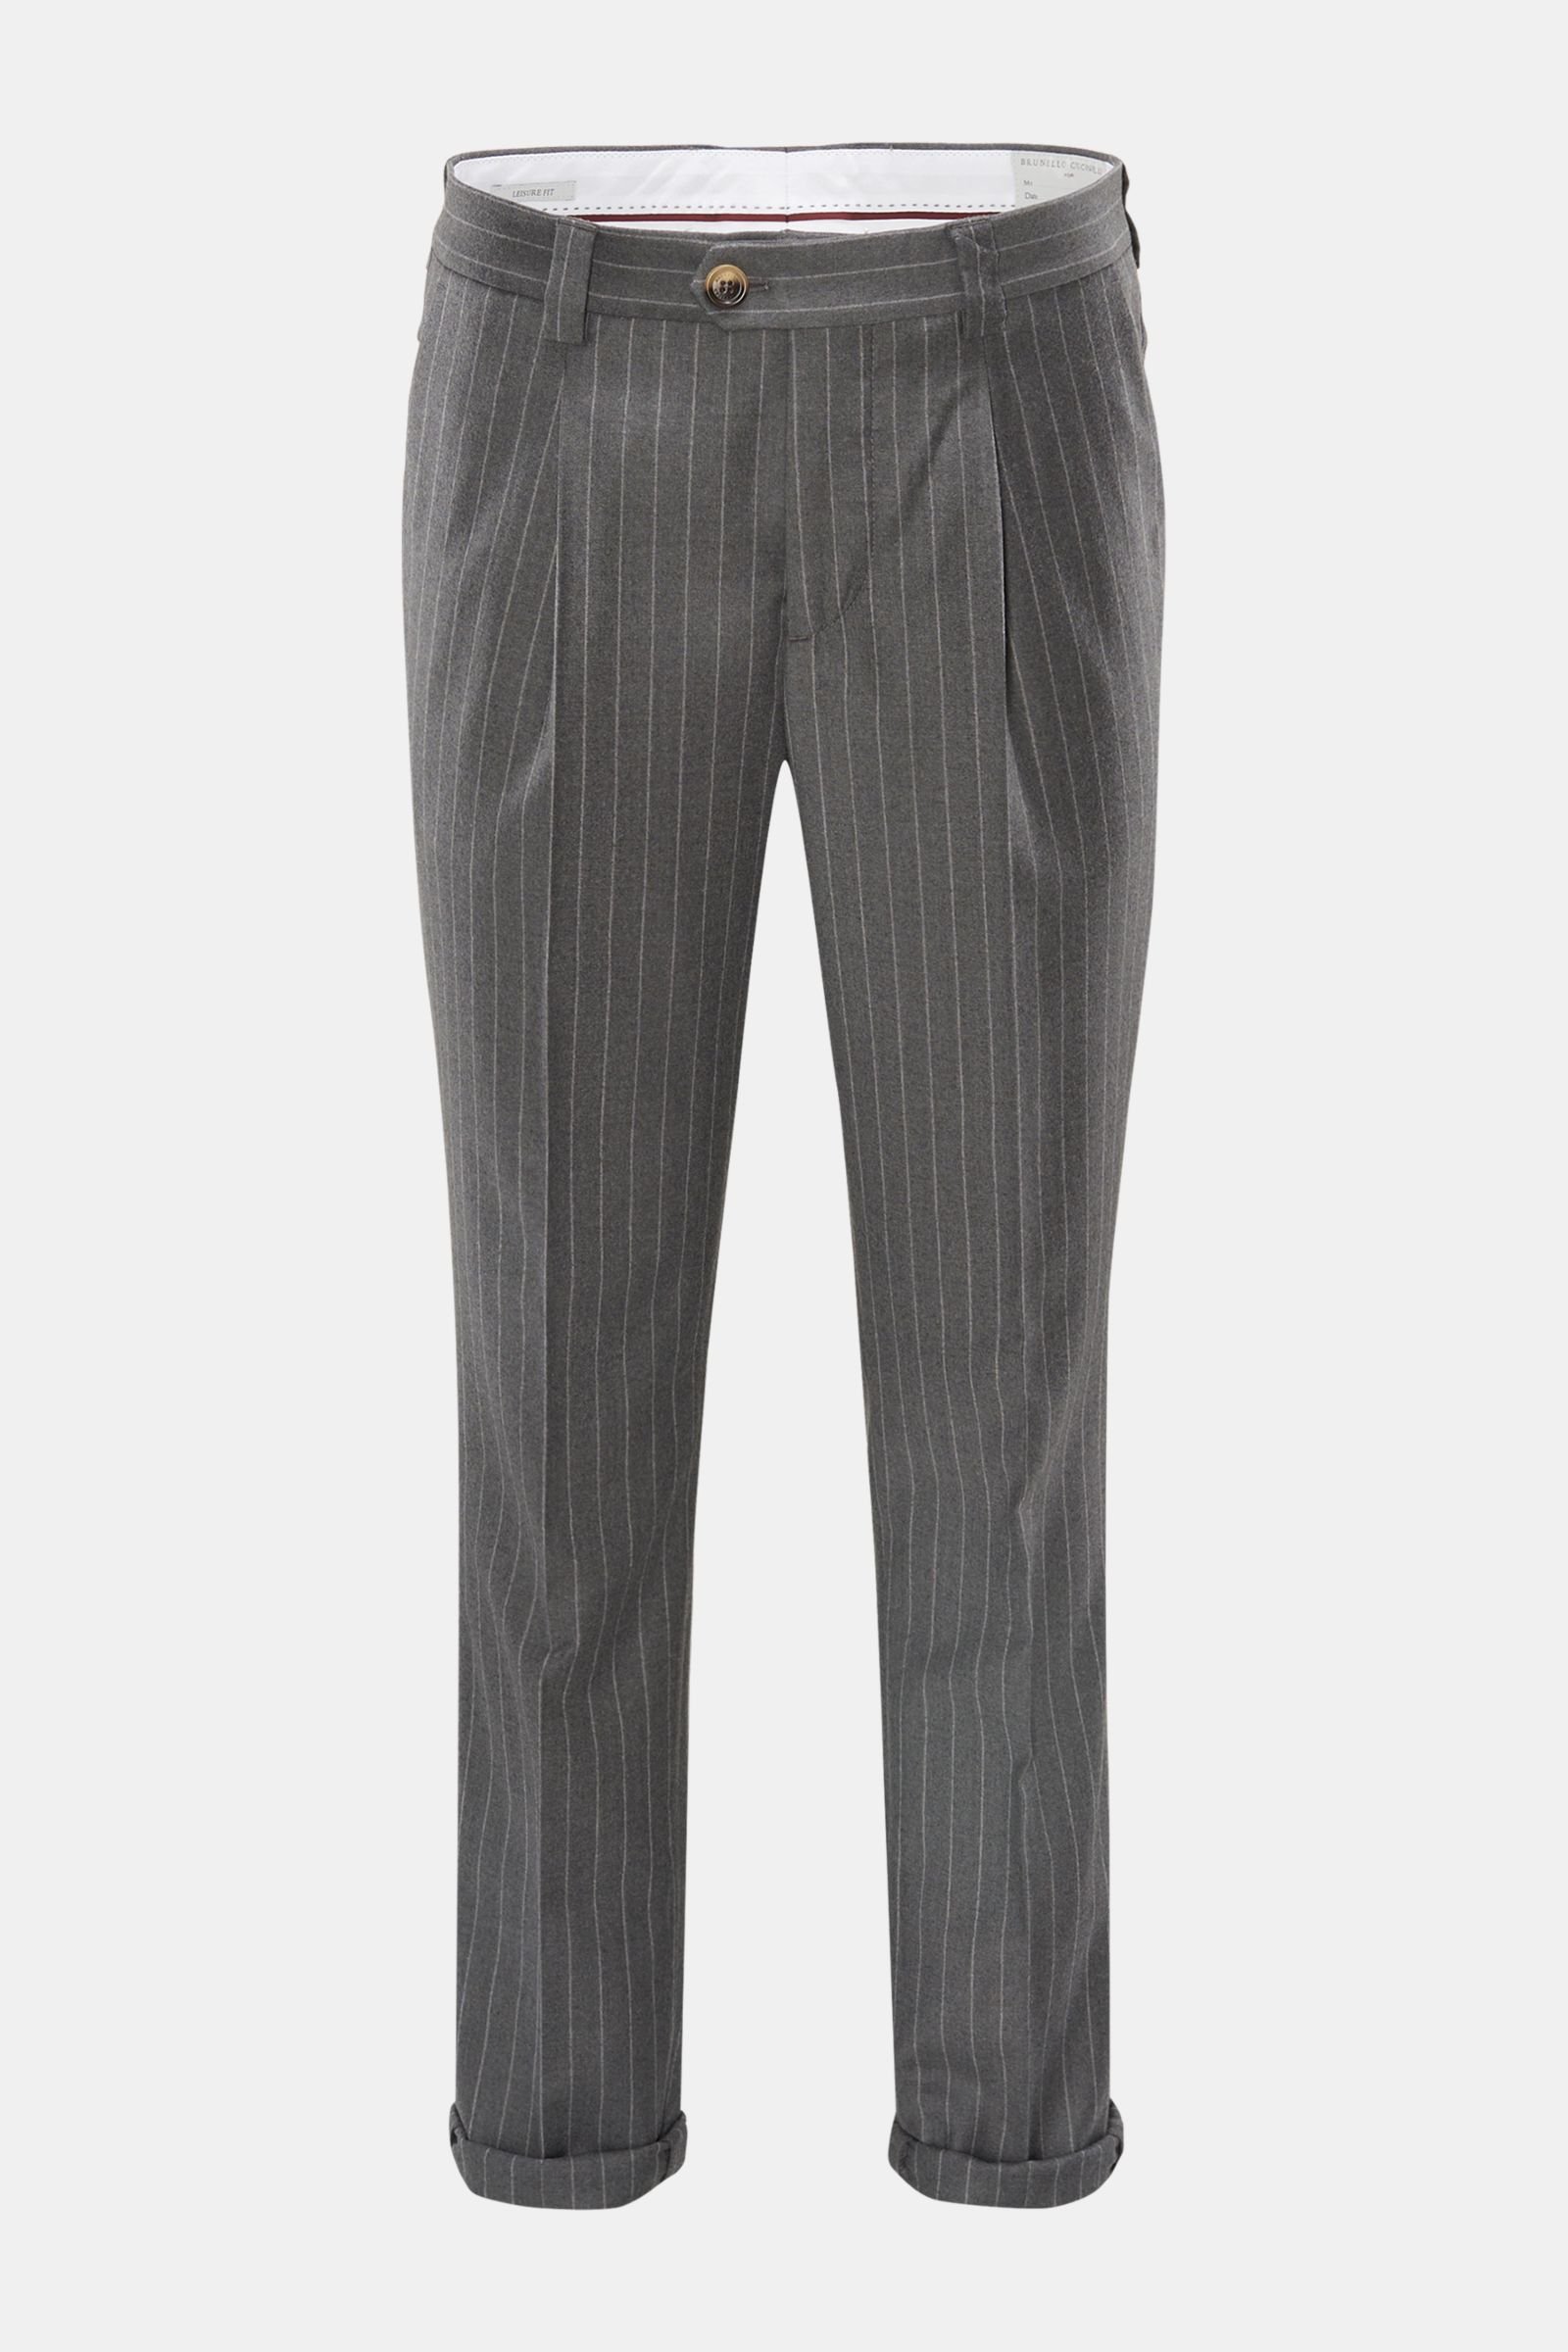 Wool trousers 'Leisure Fit' dark grey/light grey striped